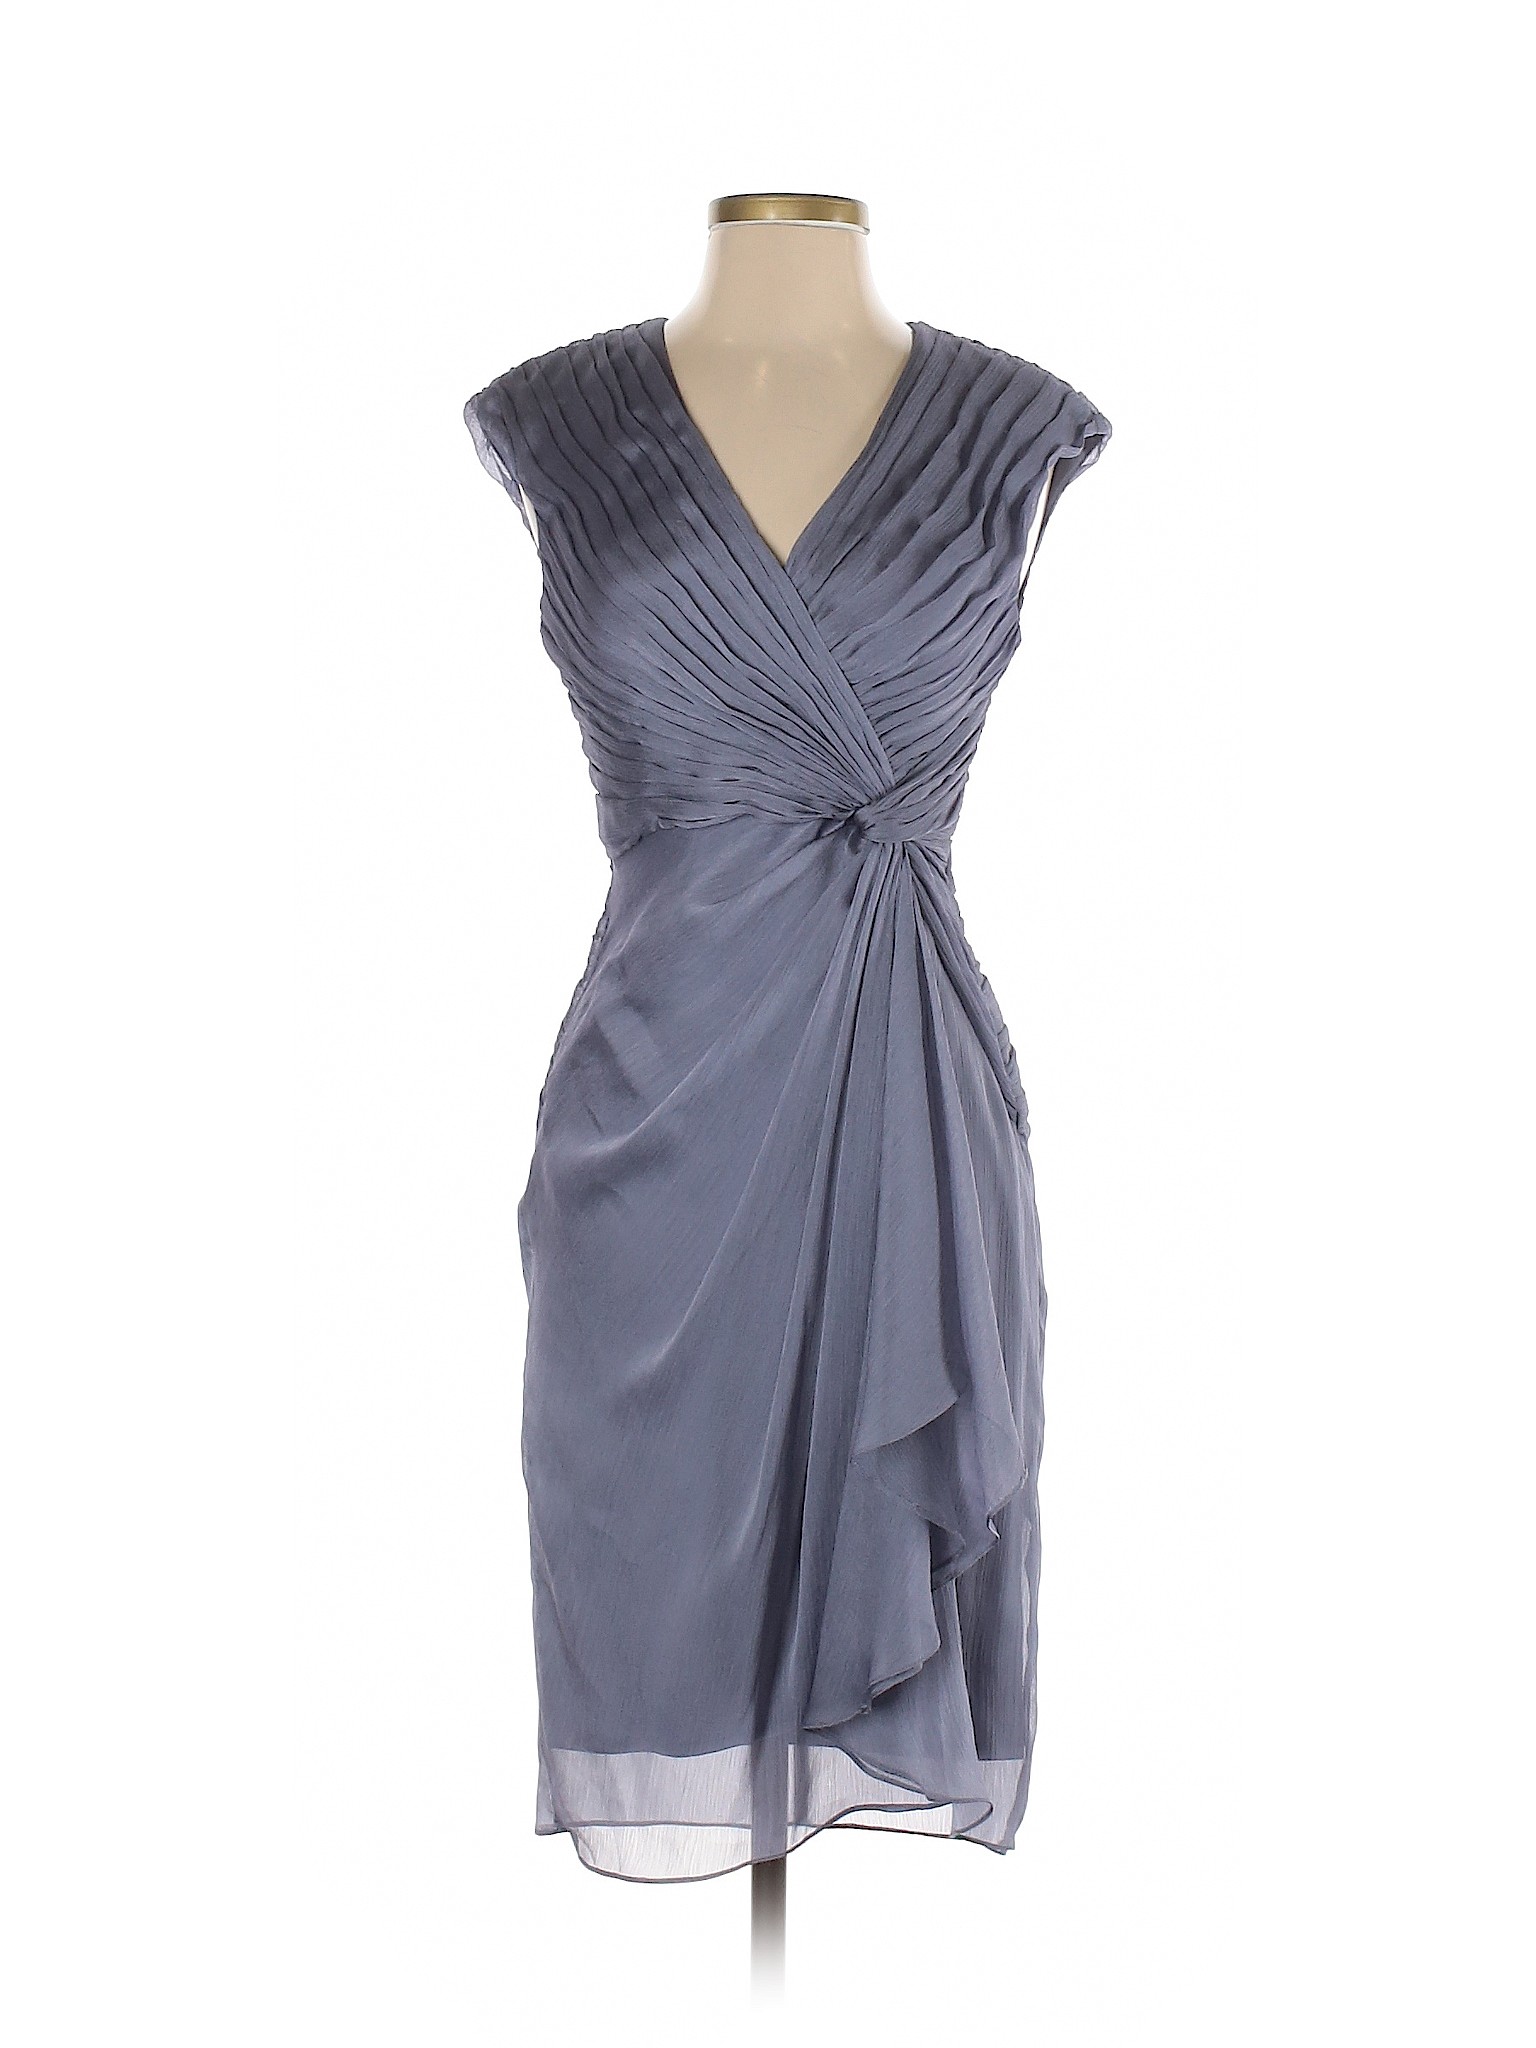 Adrianna Papell Women Purple Cocktail Dress 2 | eBay